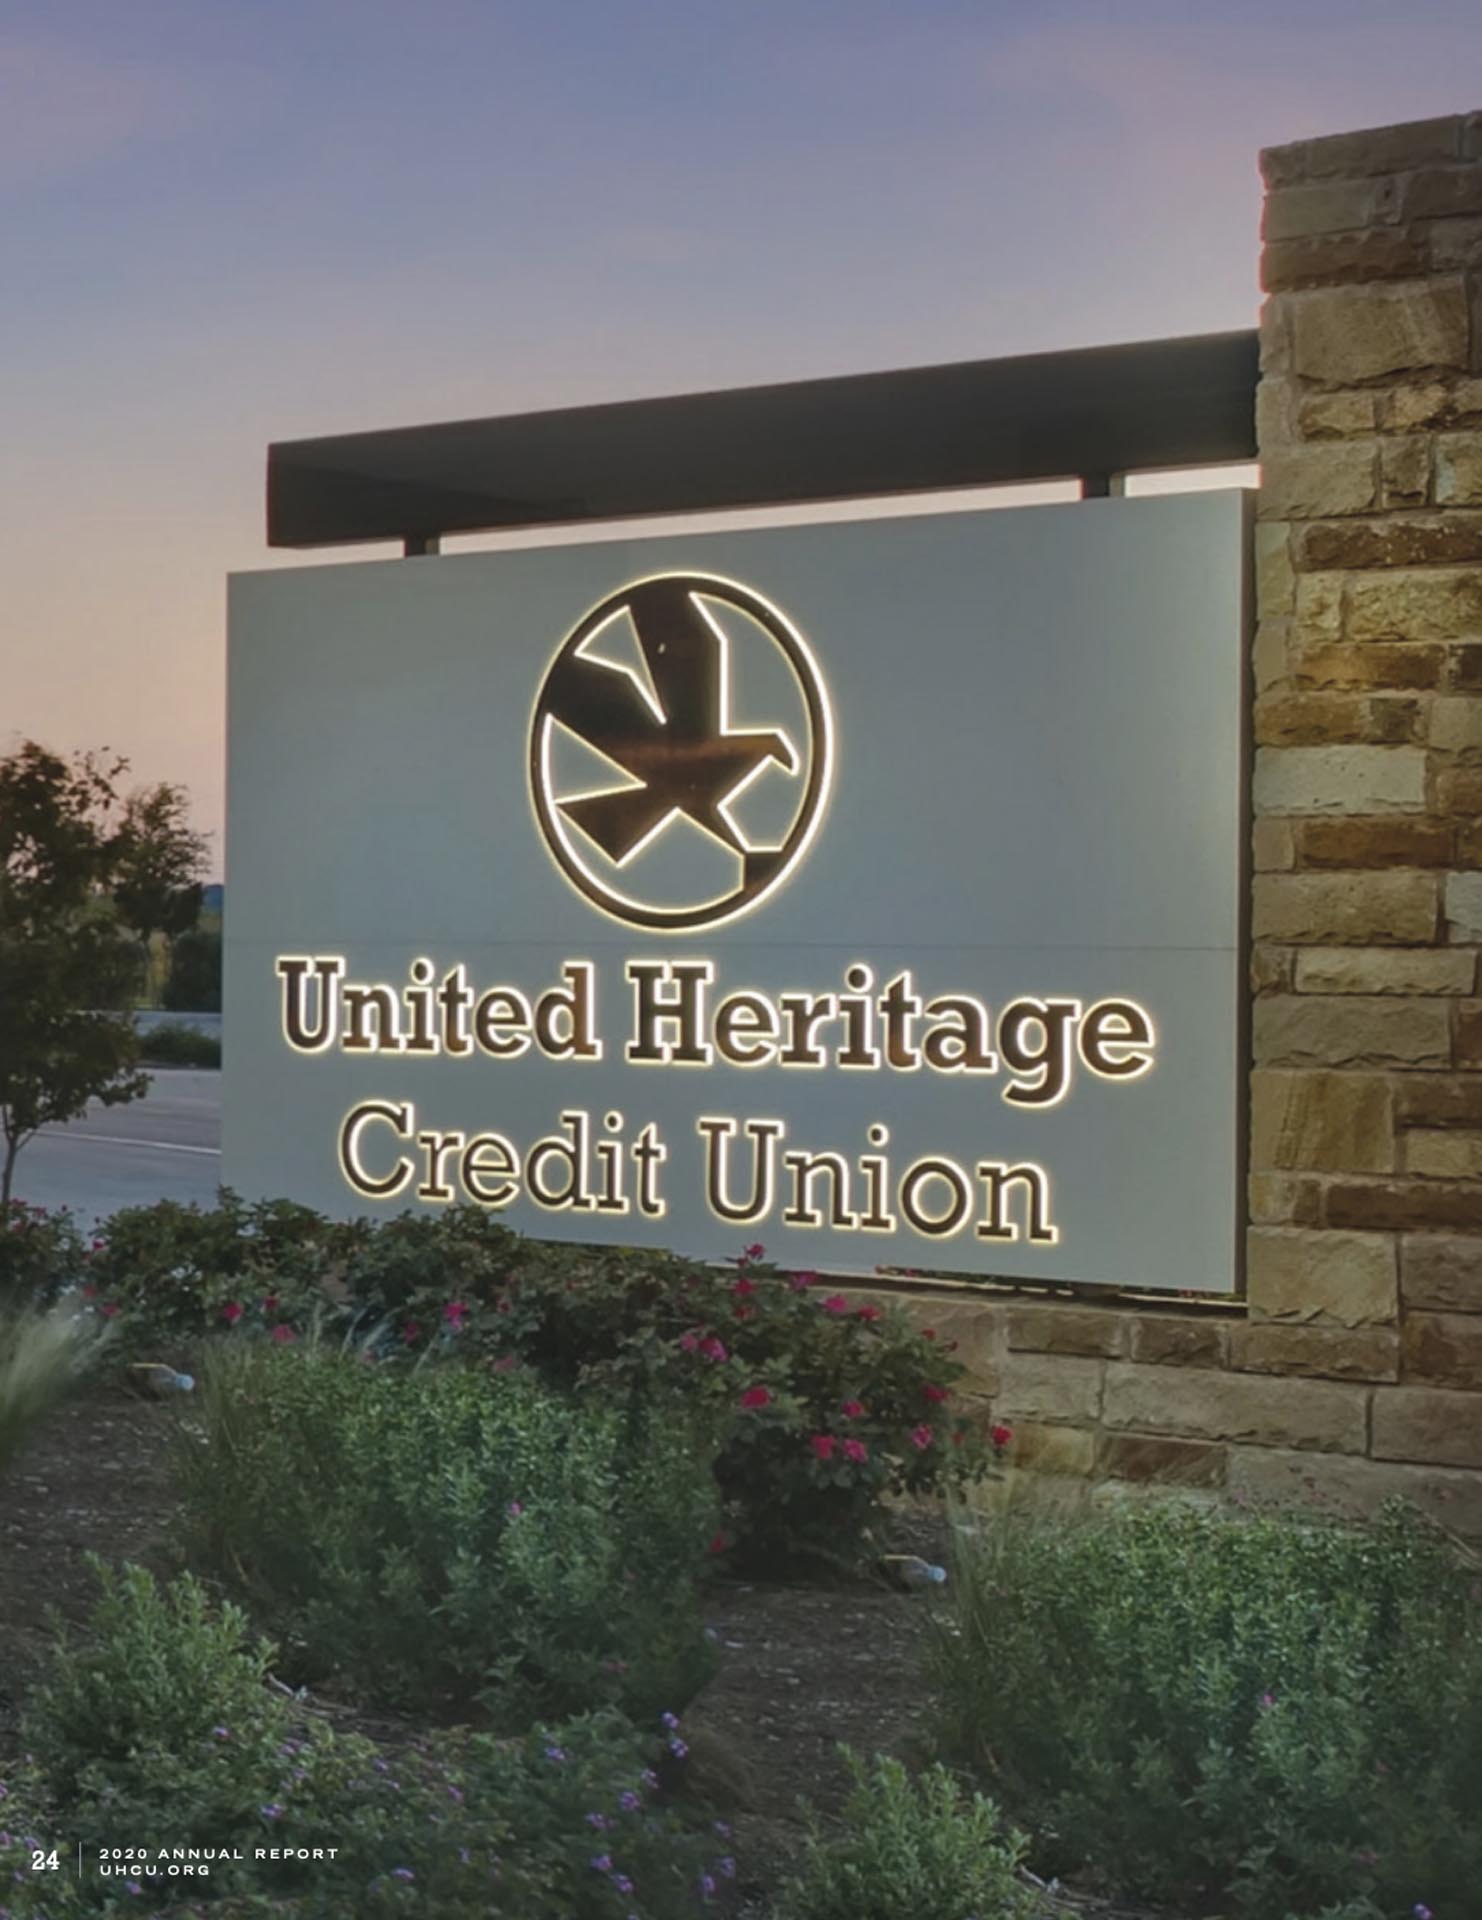 Vega Digital Awards Winner - 2020 Annual Report, United Heritage Credit Union